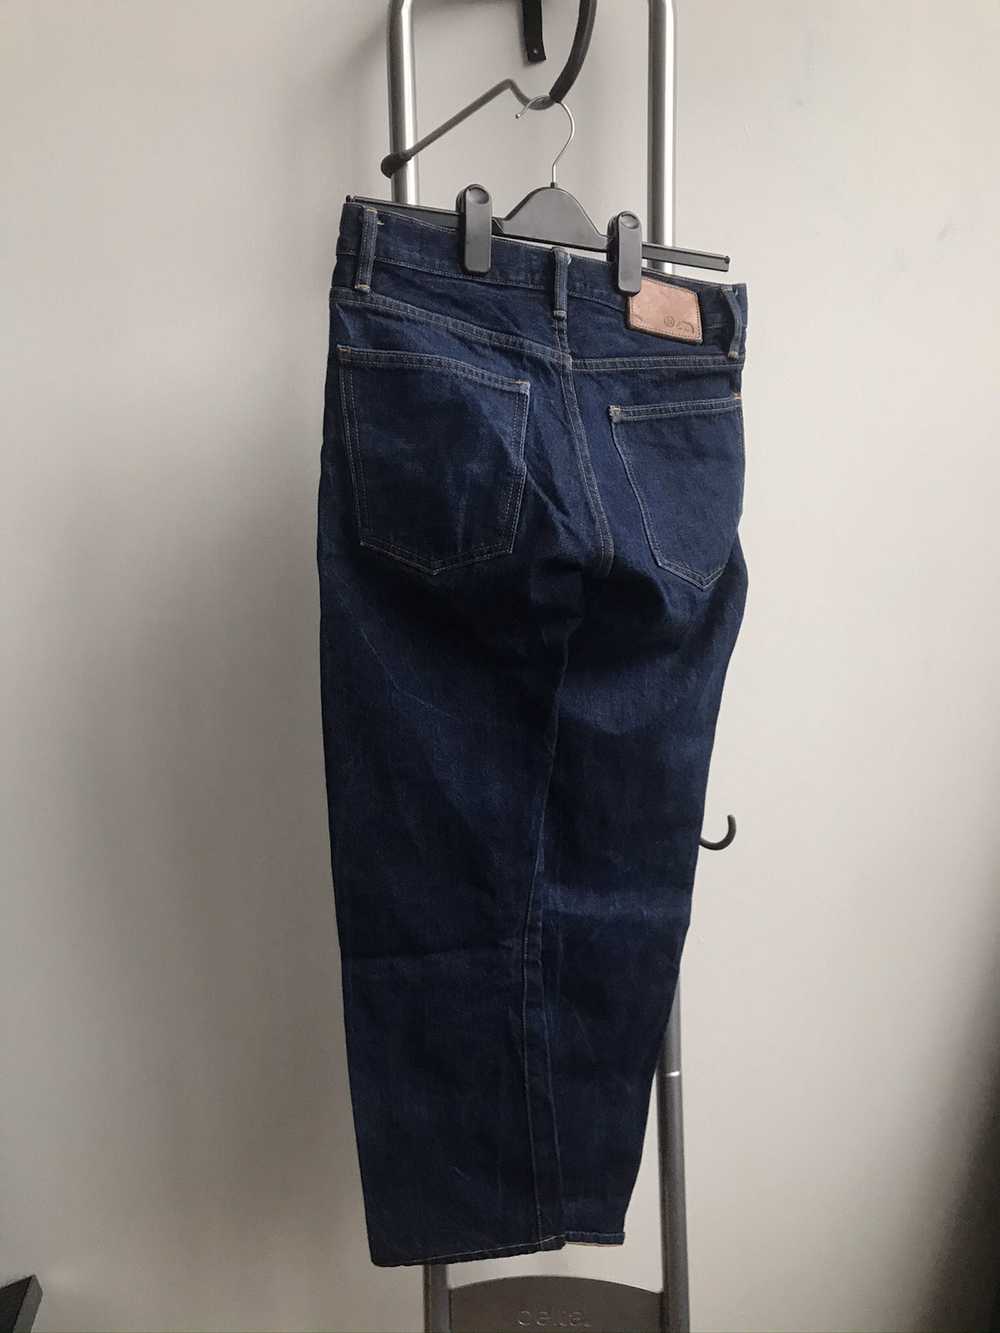 Taylor Stitch Selvedge Denim Jeans 30x32 - image 1